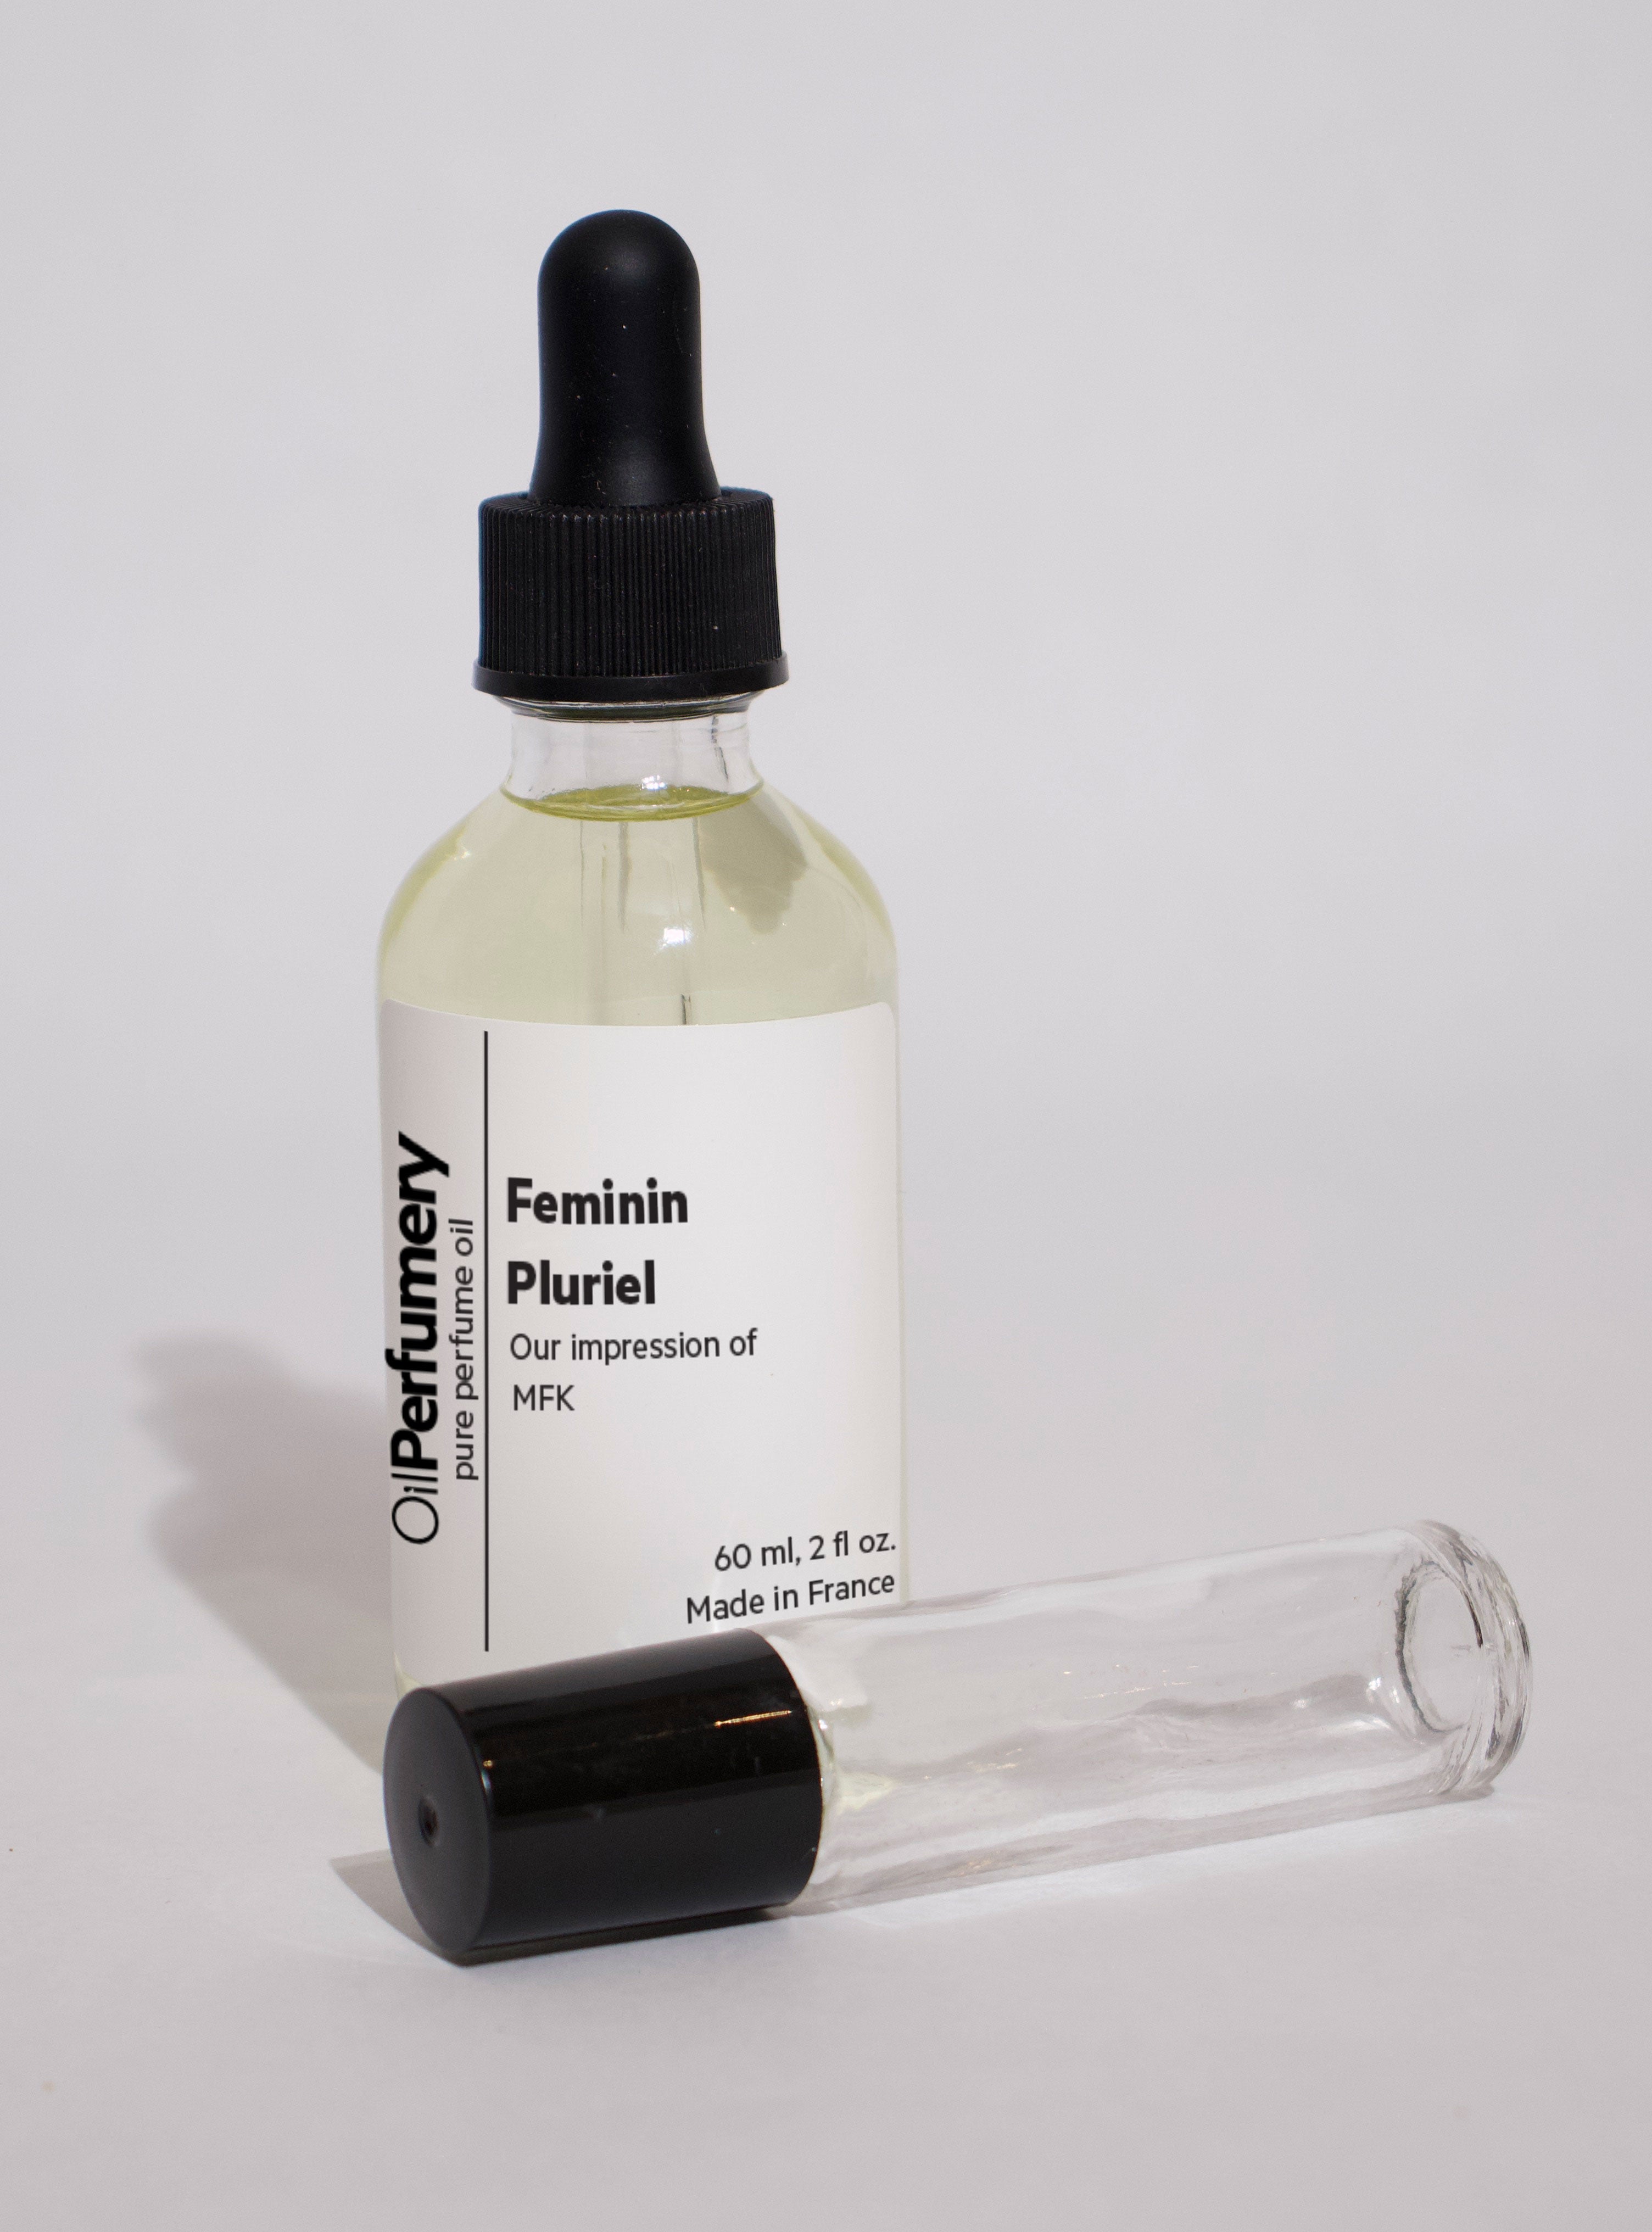 Oil Perfumery Impression of MFK - Feminin Pluriel